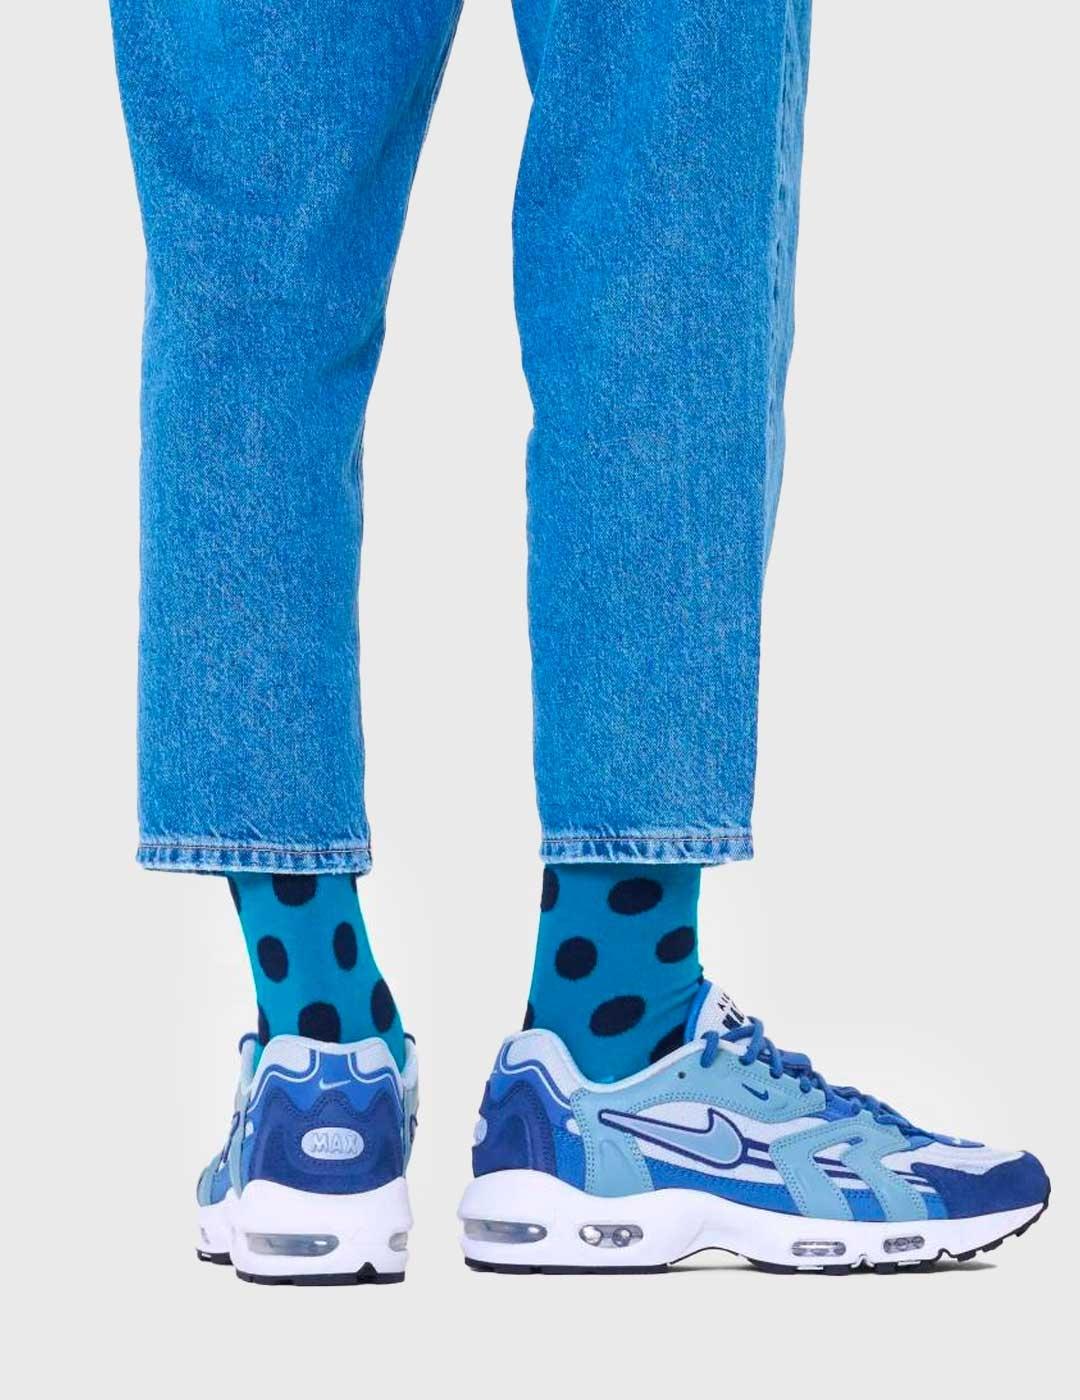 Calcetines Happy Socks Big Dot azules unisex